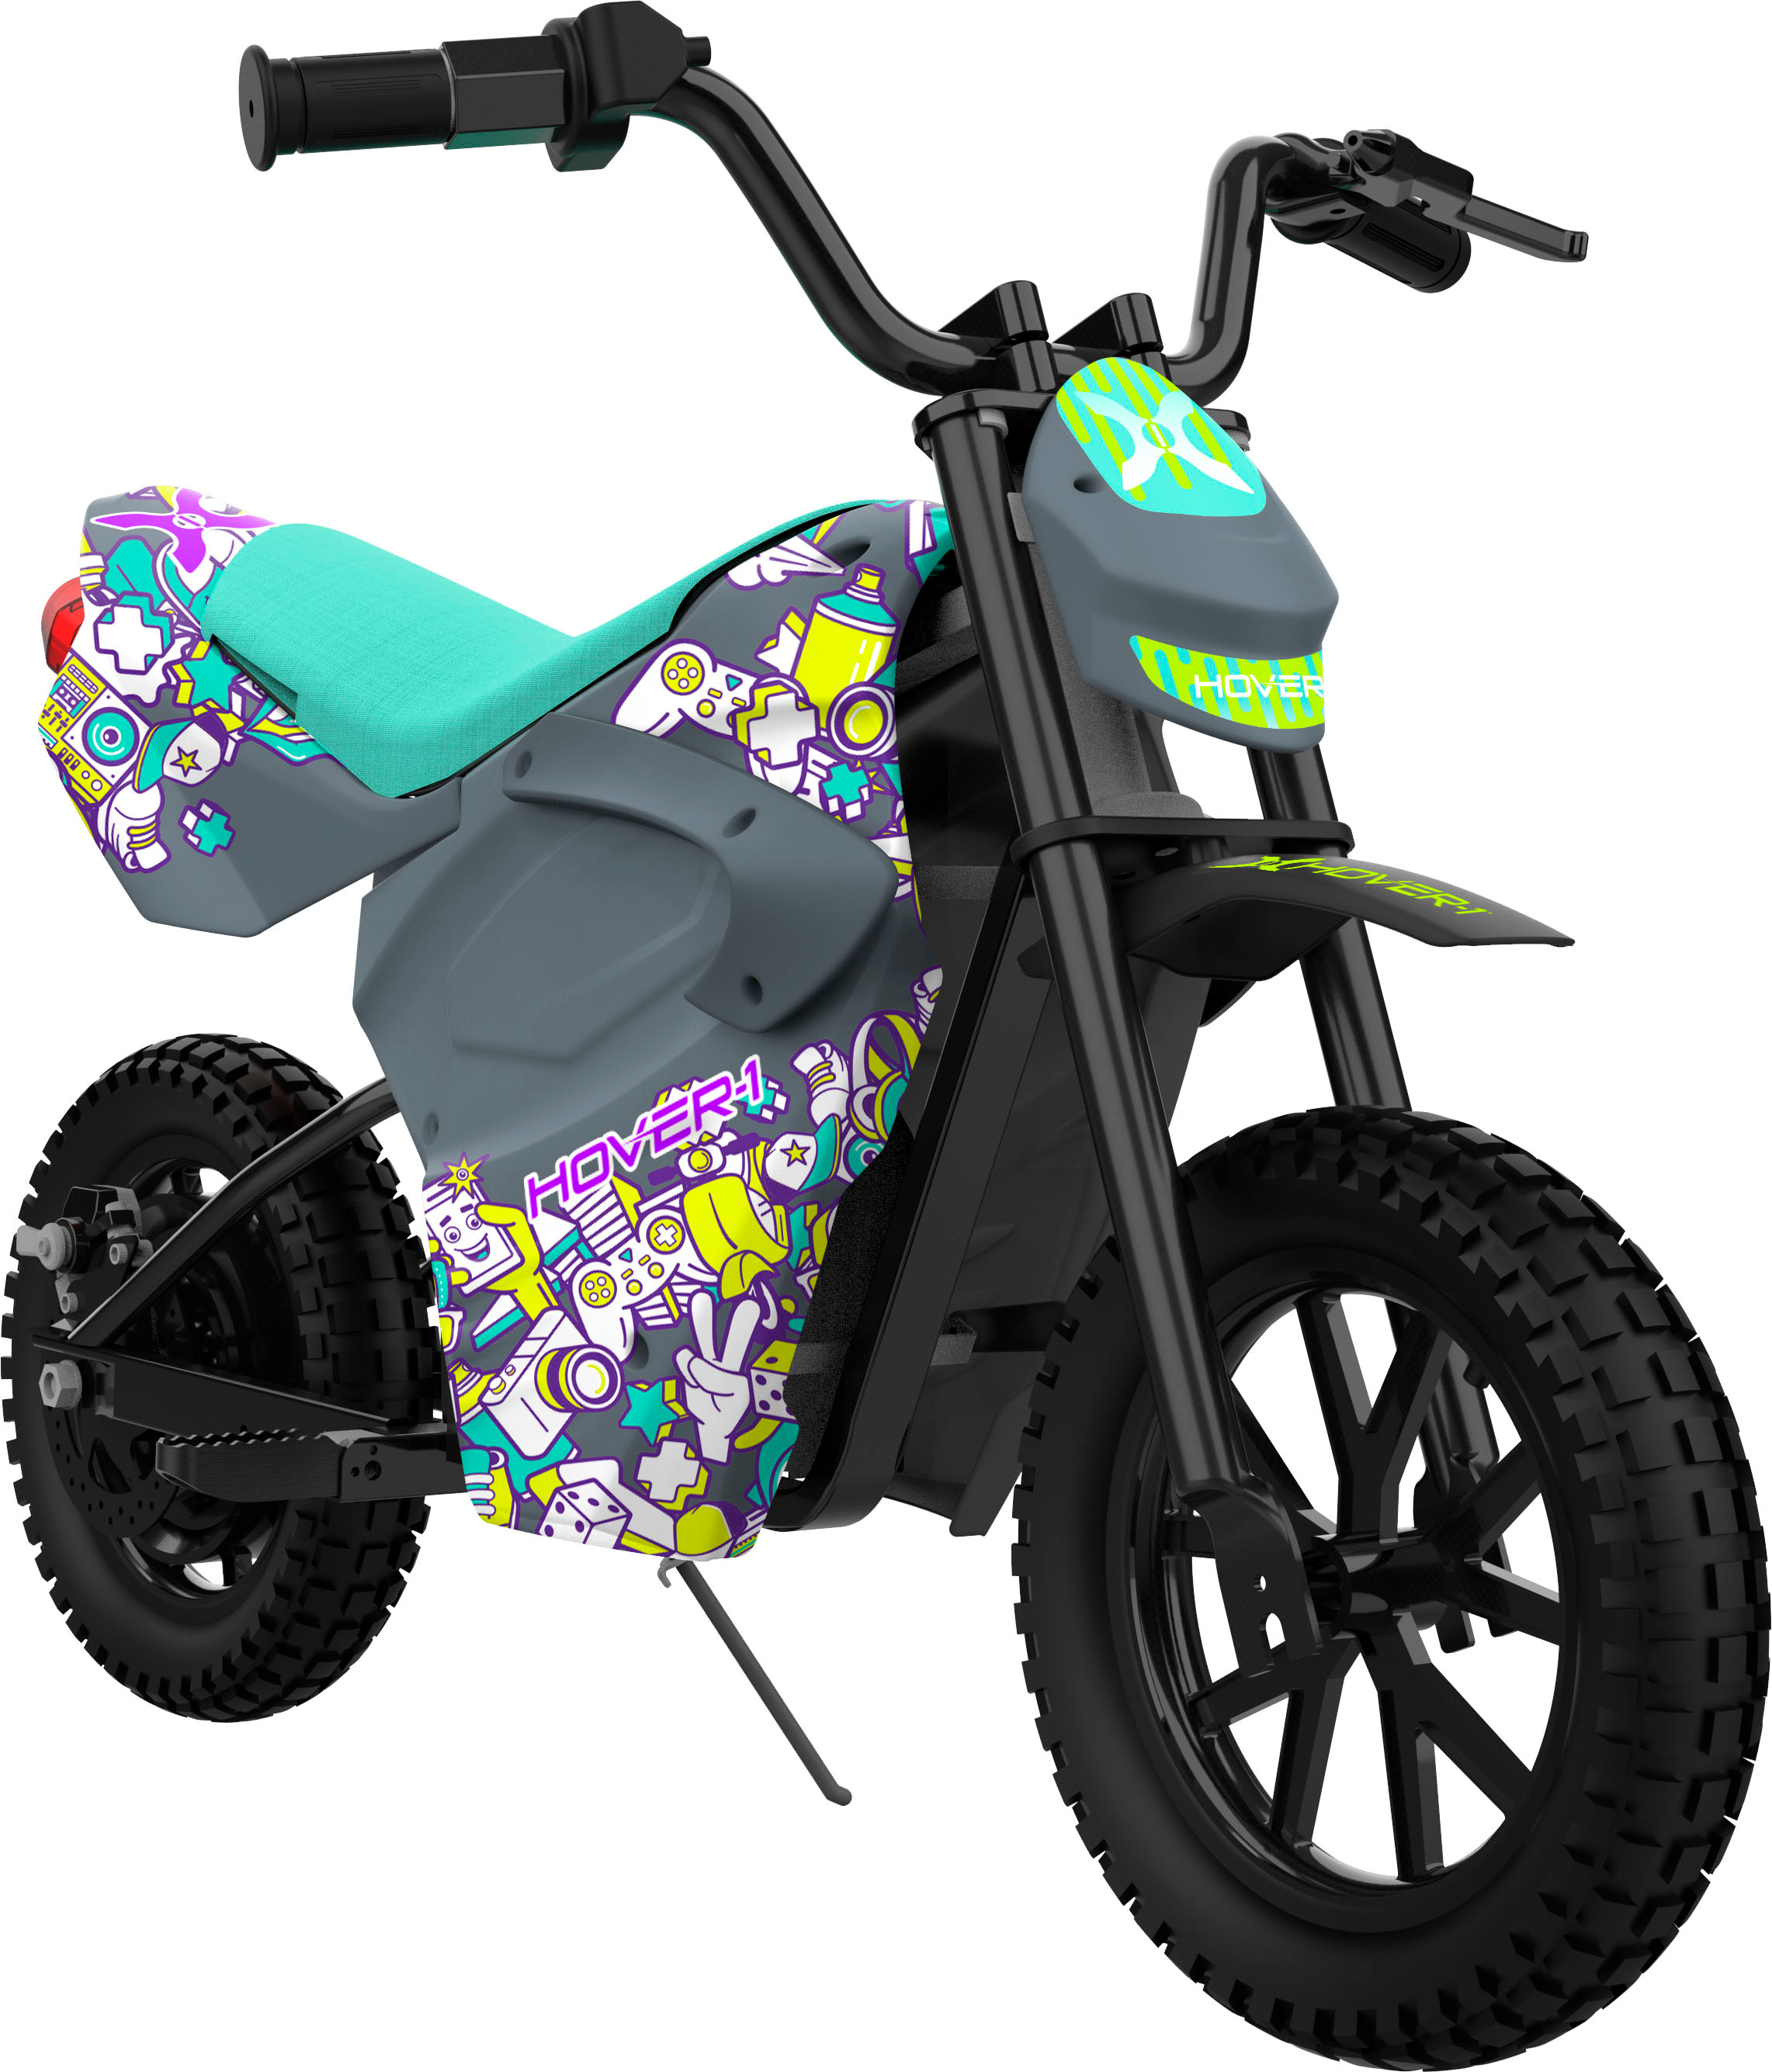 Hover-1 Trak Electric Dirt Bike for Kids, Silent-chainless motor, Lithium-ion Battery, 9 mi Range, 9 mph Max Speed Black H1-TRAK-BLK